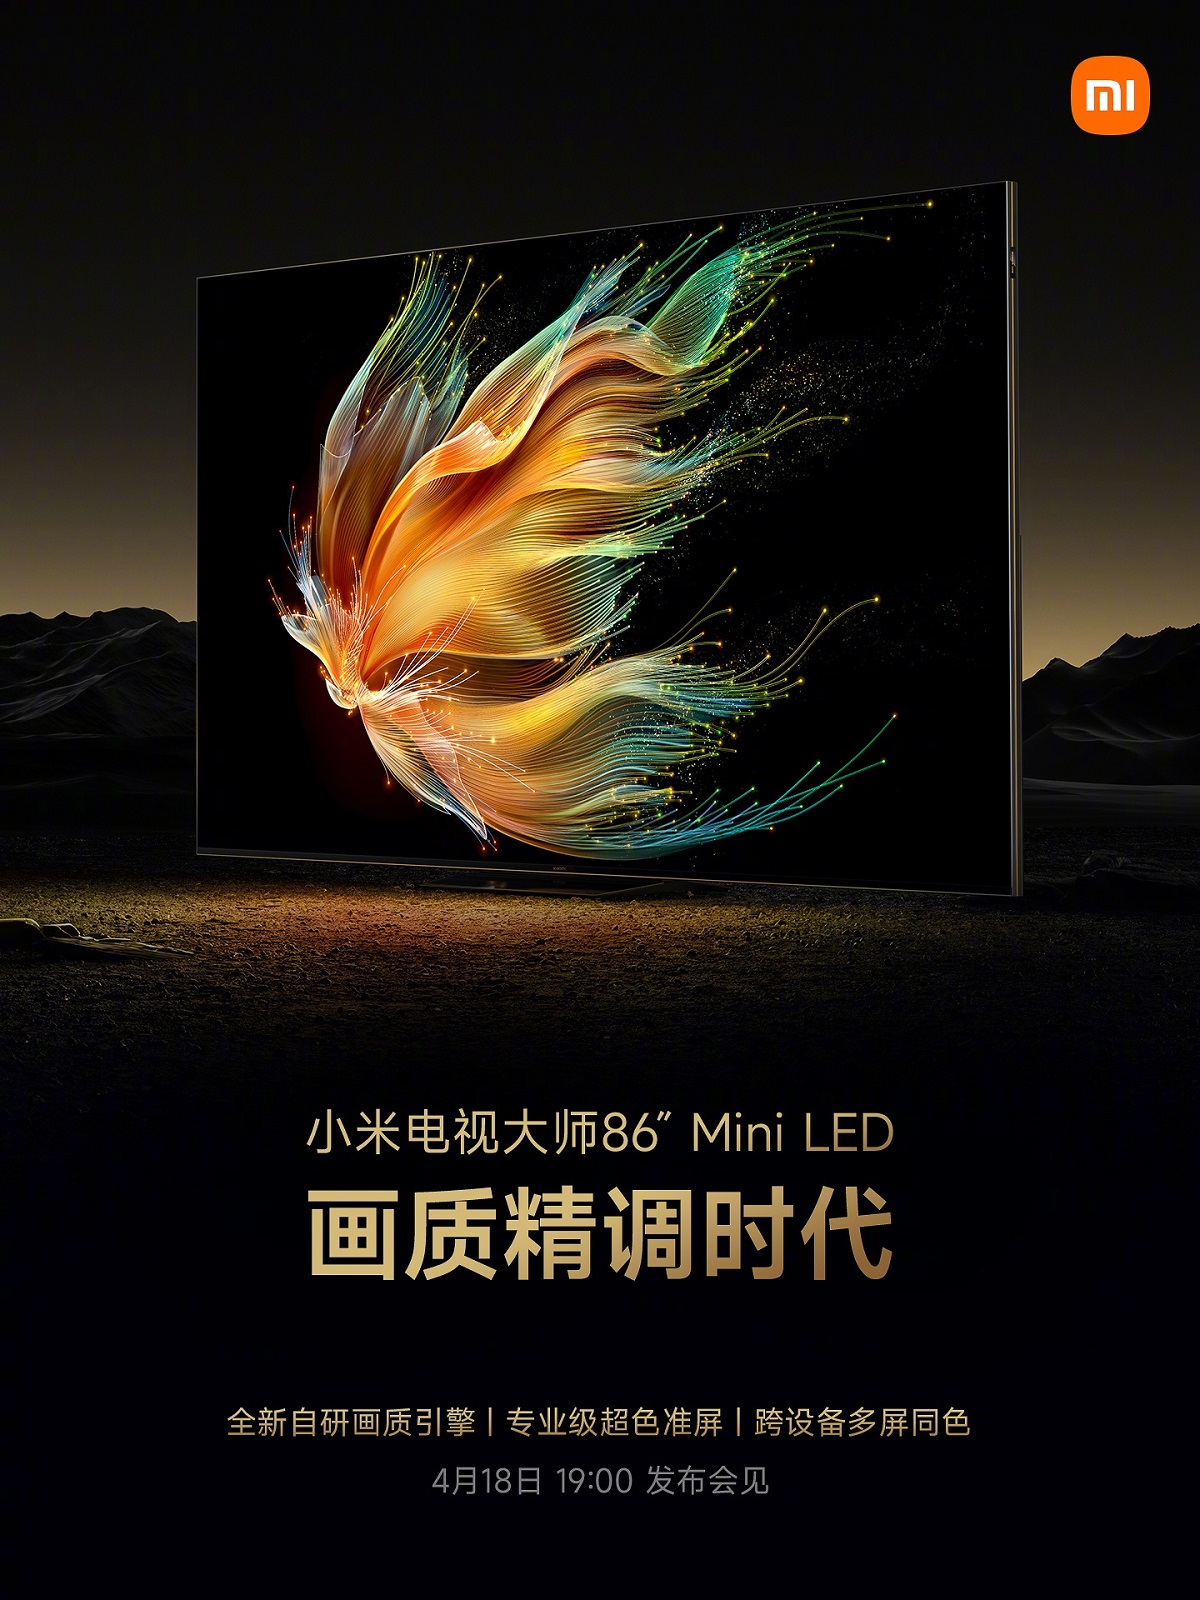 Xiaomi_Master_86_Mini_LED_01hc_hcno802_1.jpg